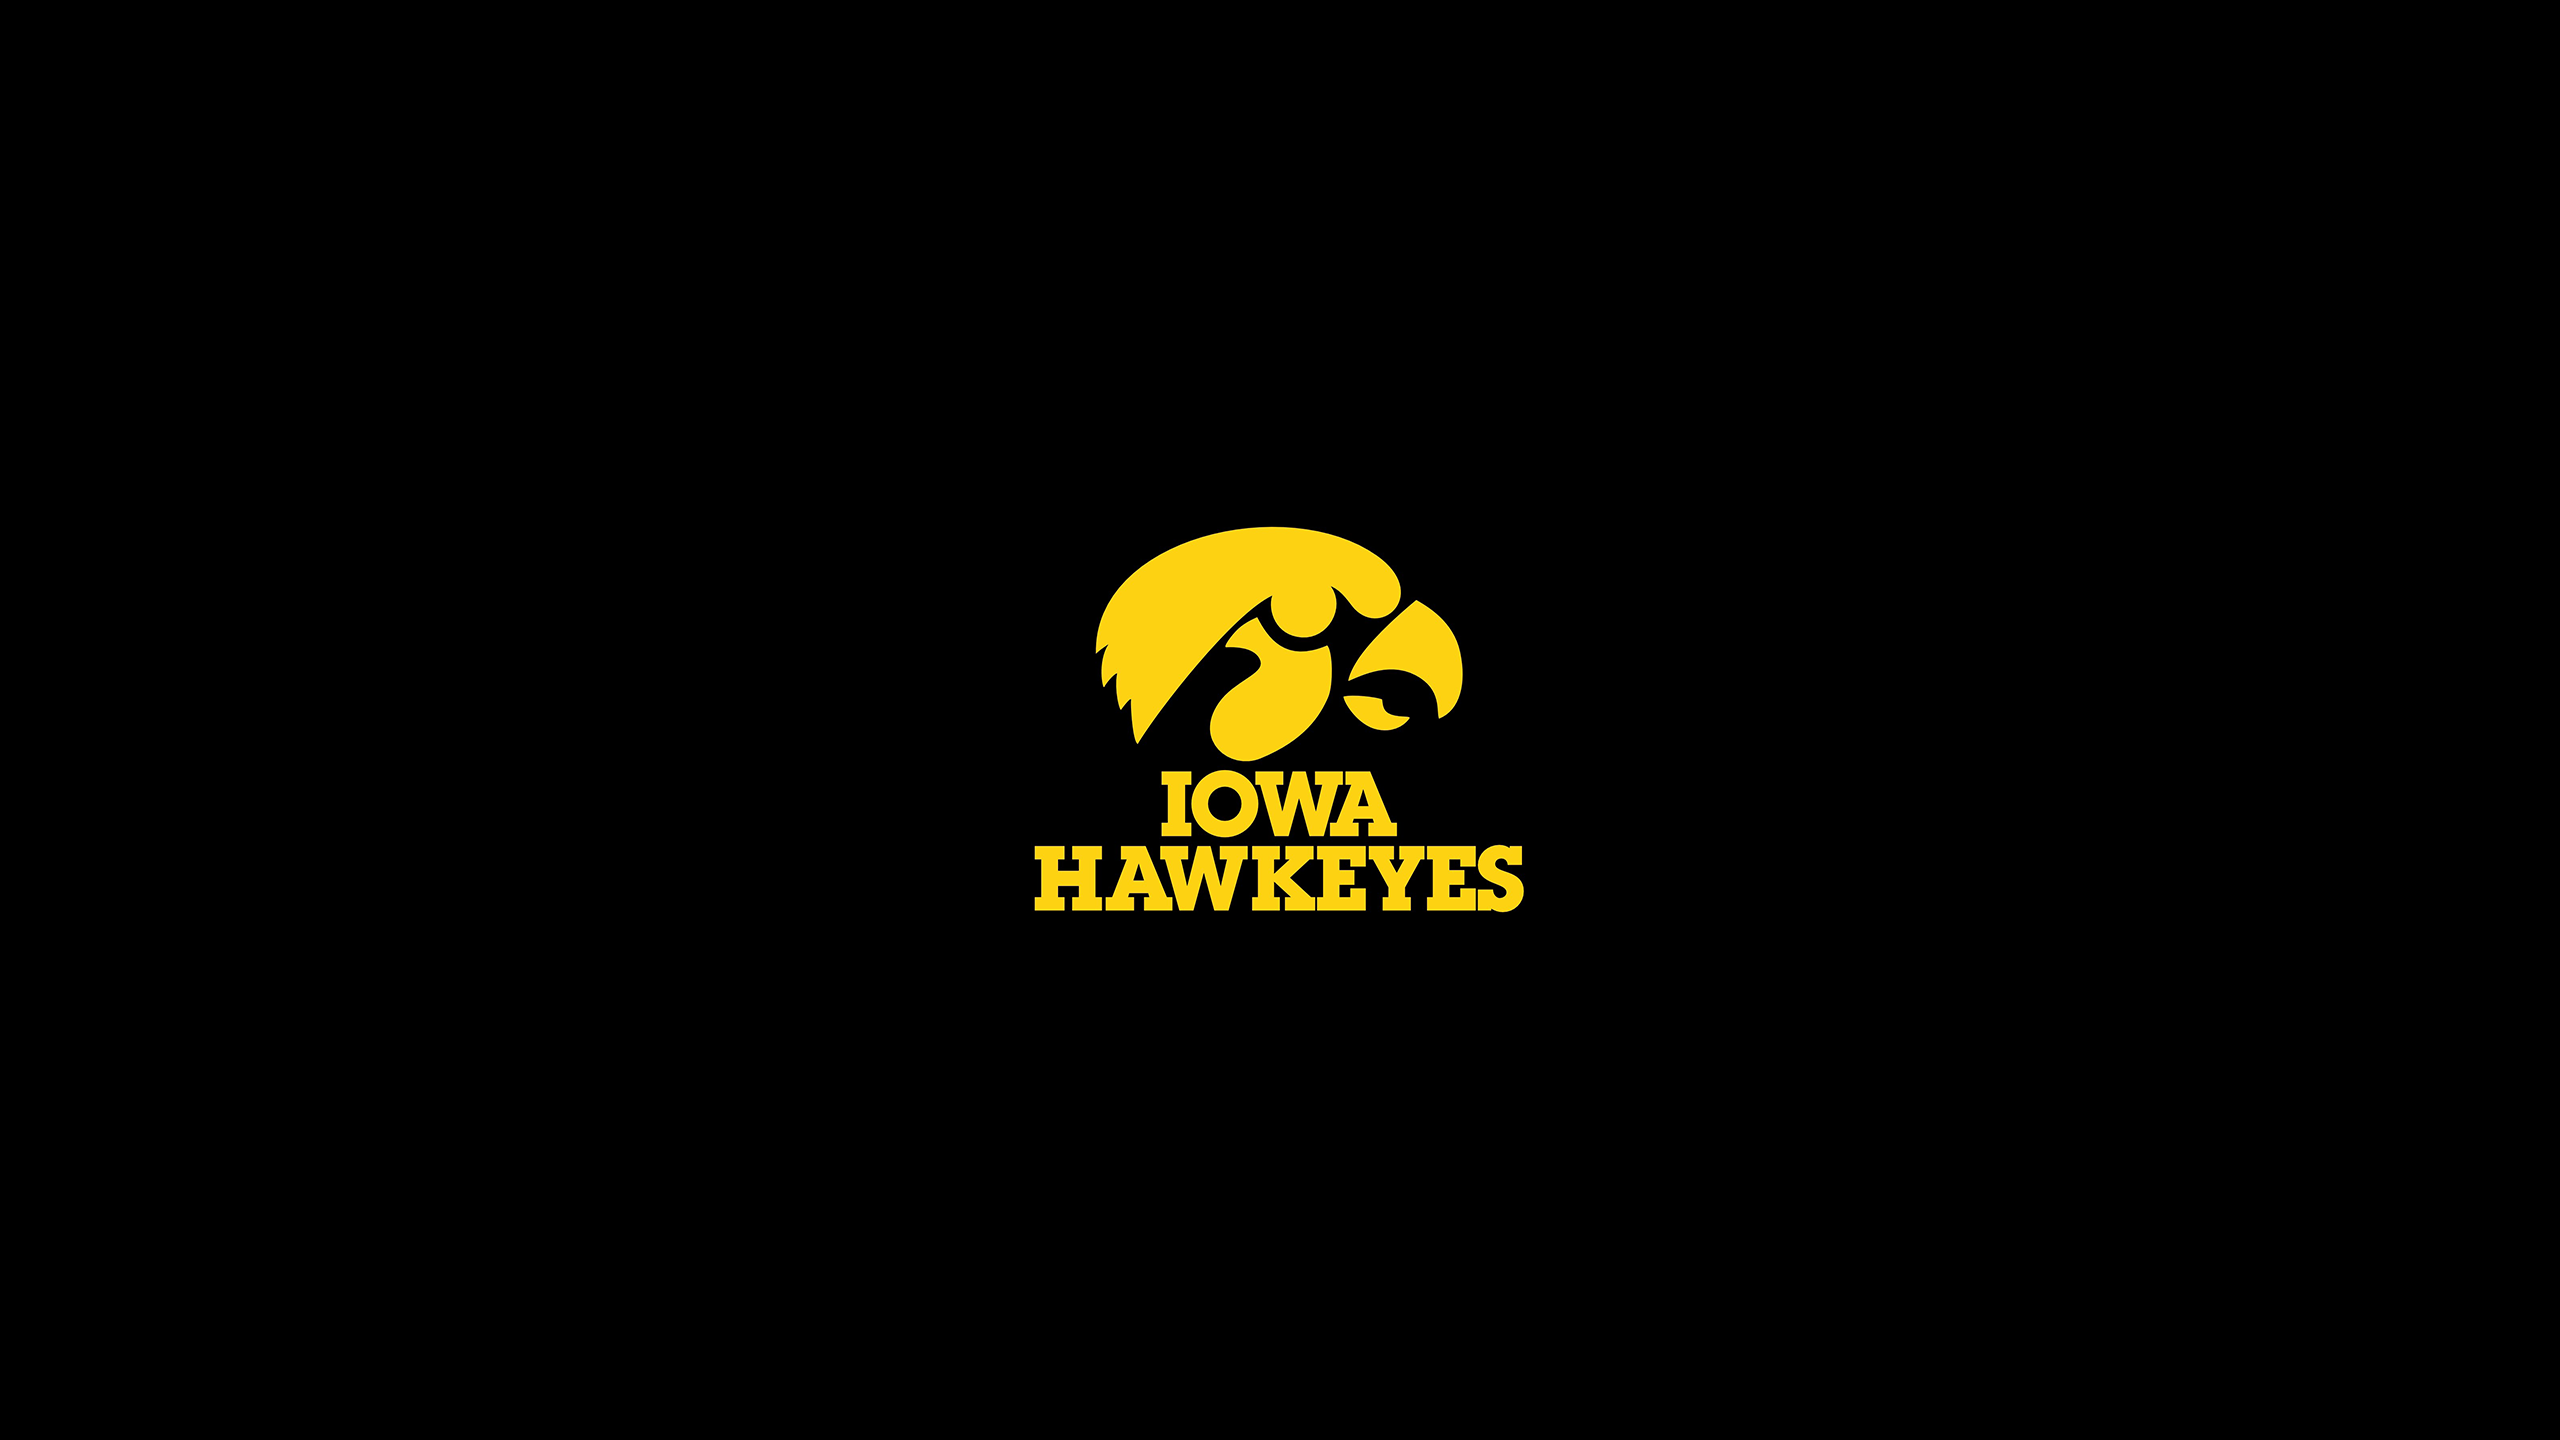 Iowa Hawkeyes Basketball - NCAAB - Square Bettor